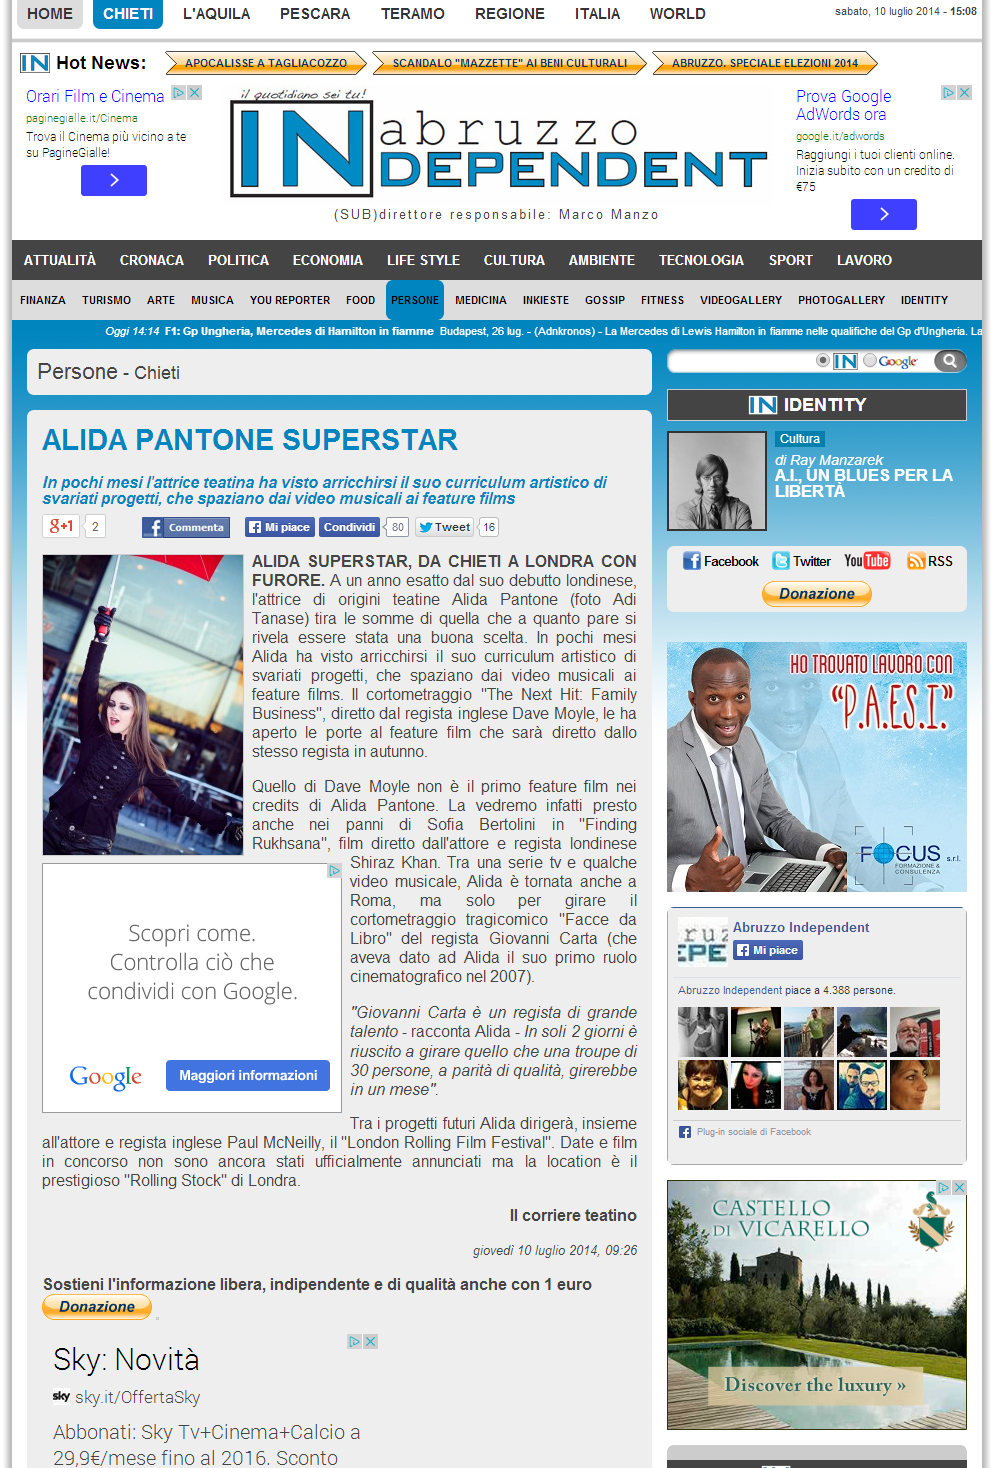 Alida Pantone Superstar